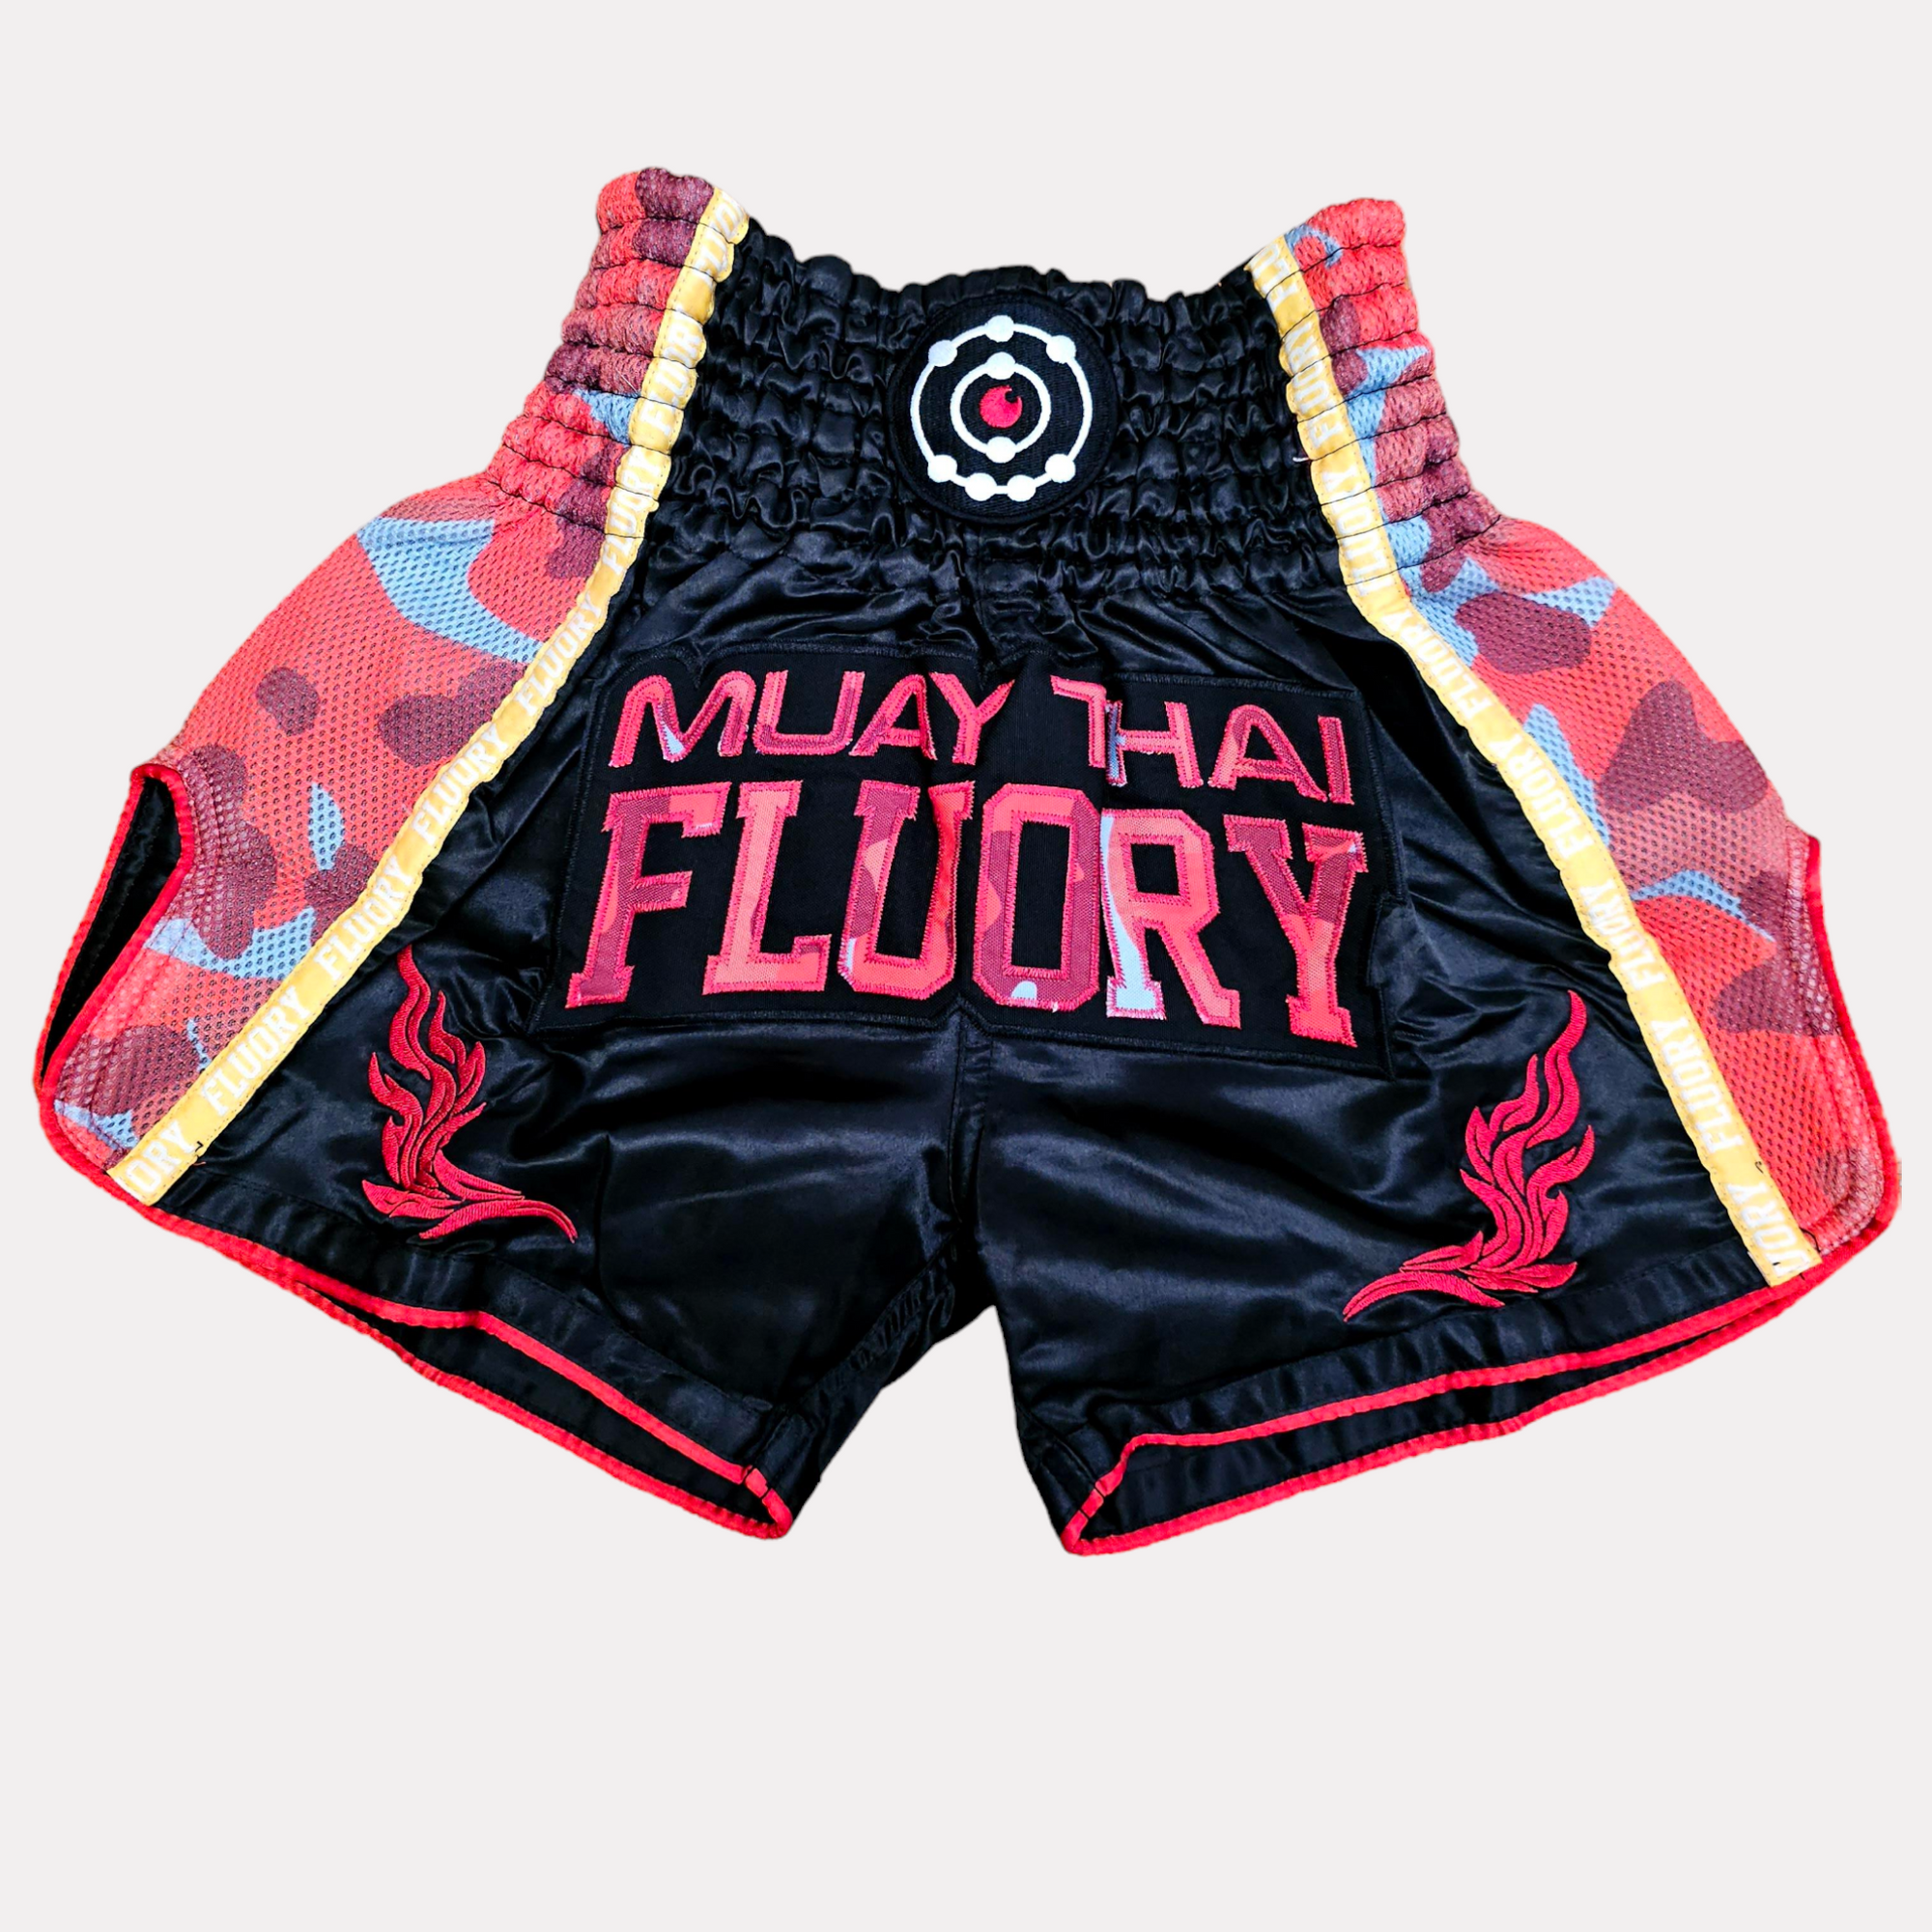 Fluory Camo Adult Muay Thai Shorts - Fight Co